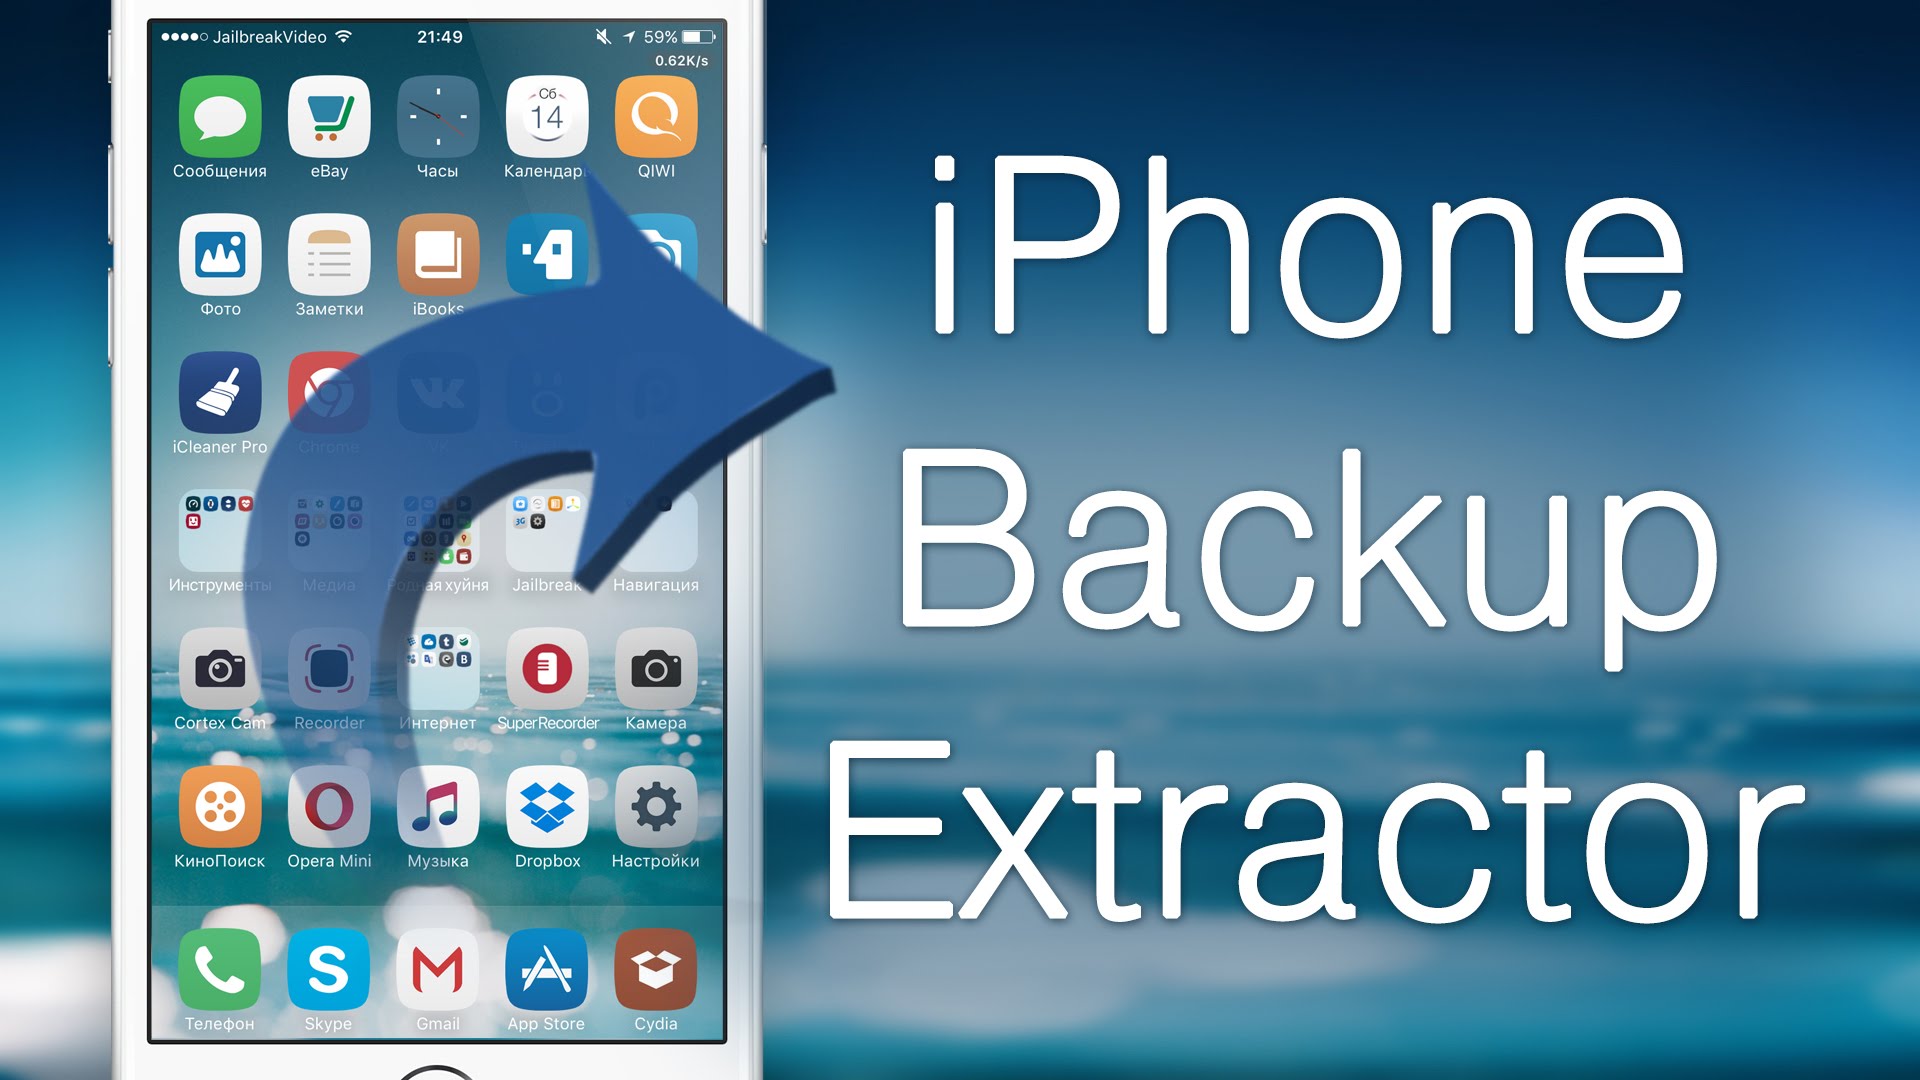 iphone backup extractor crack reddit